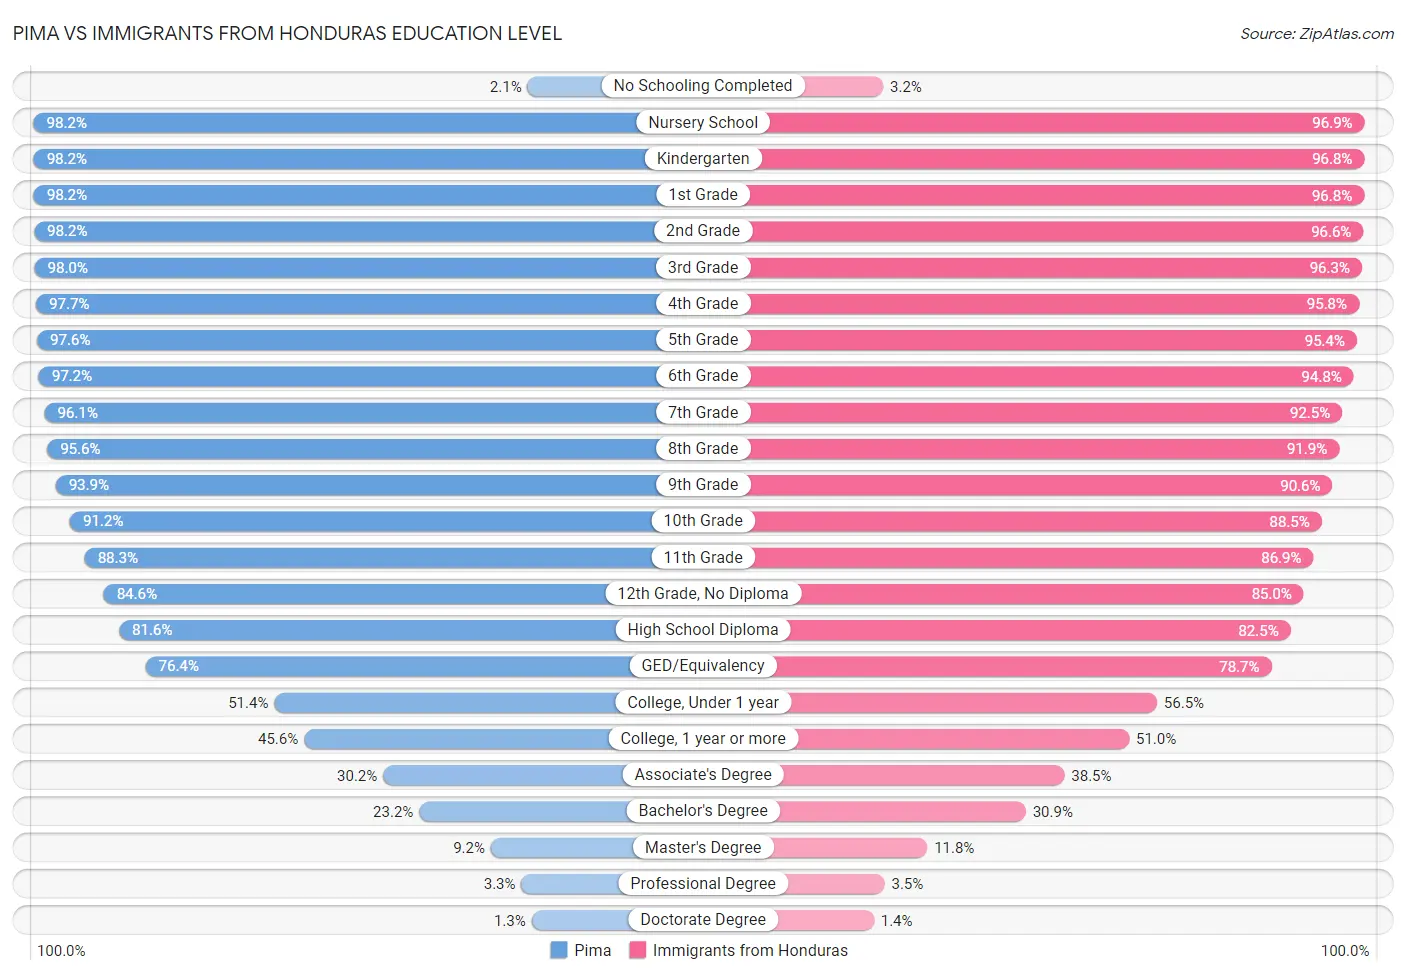 Pima vs Immigrants from Honduras Education Level